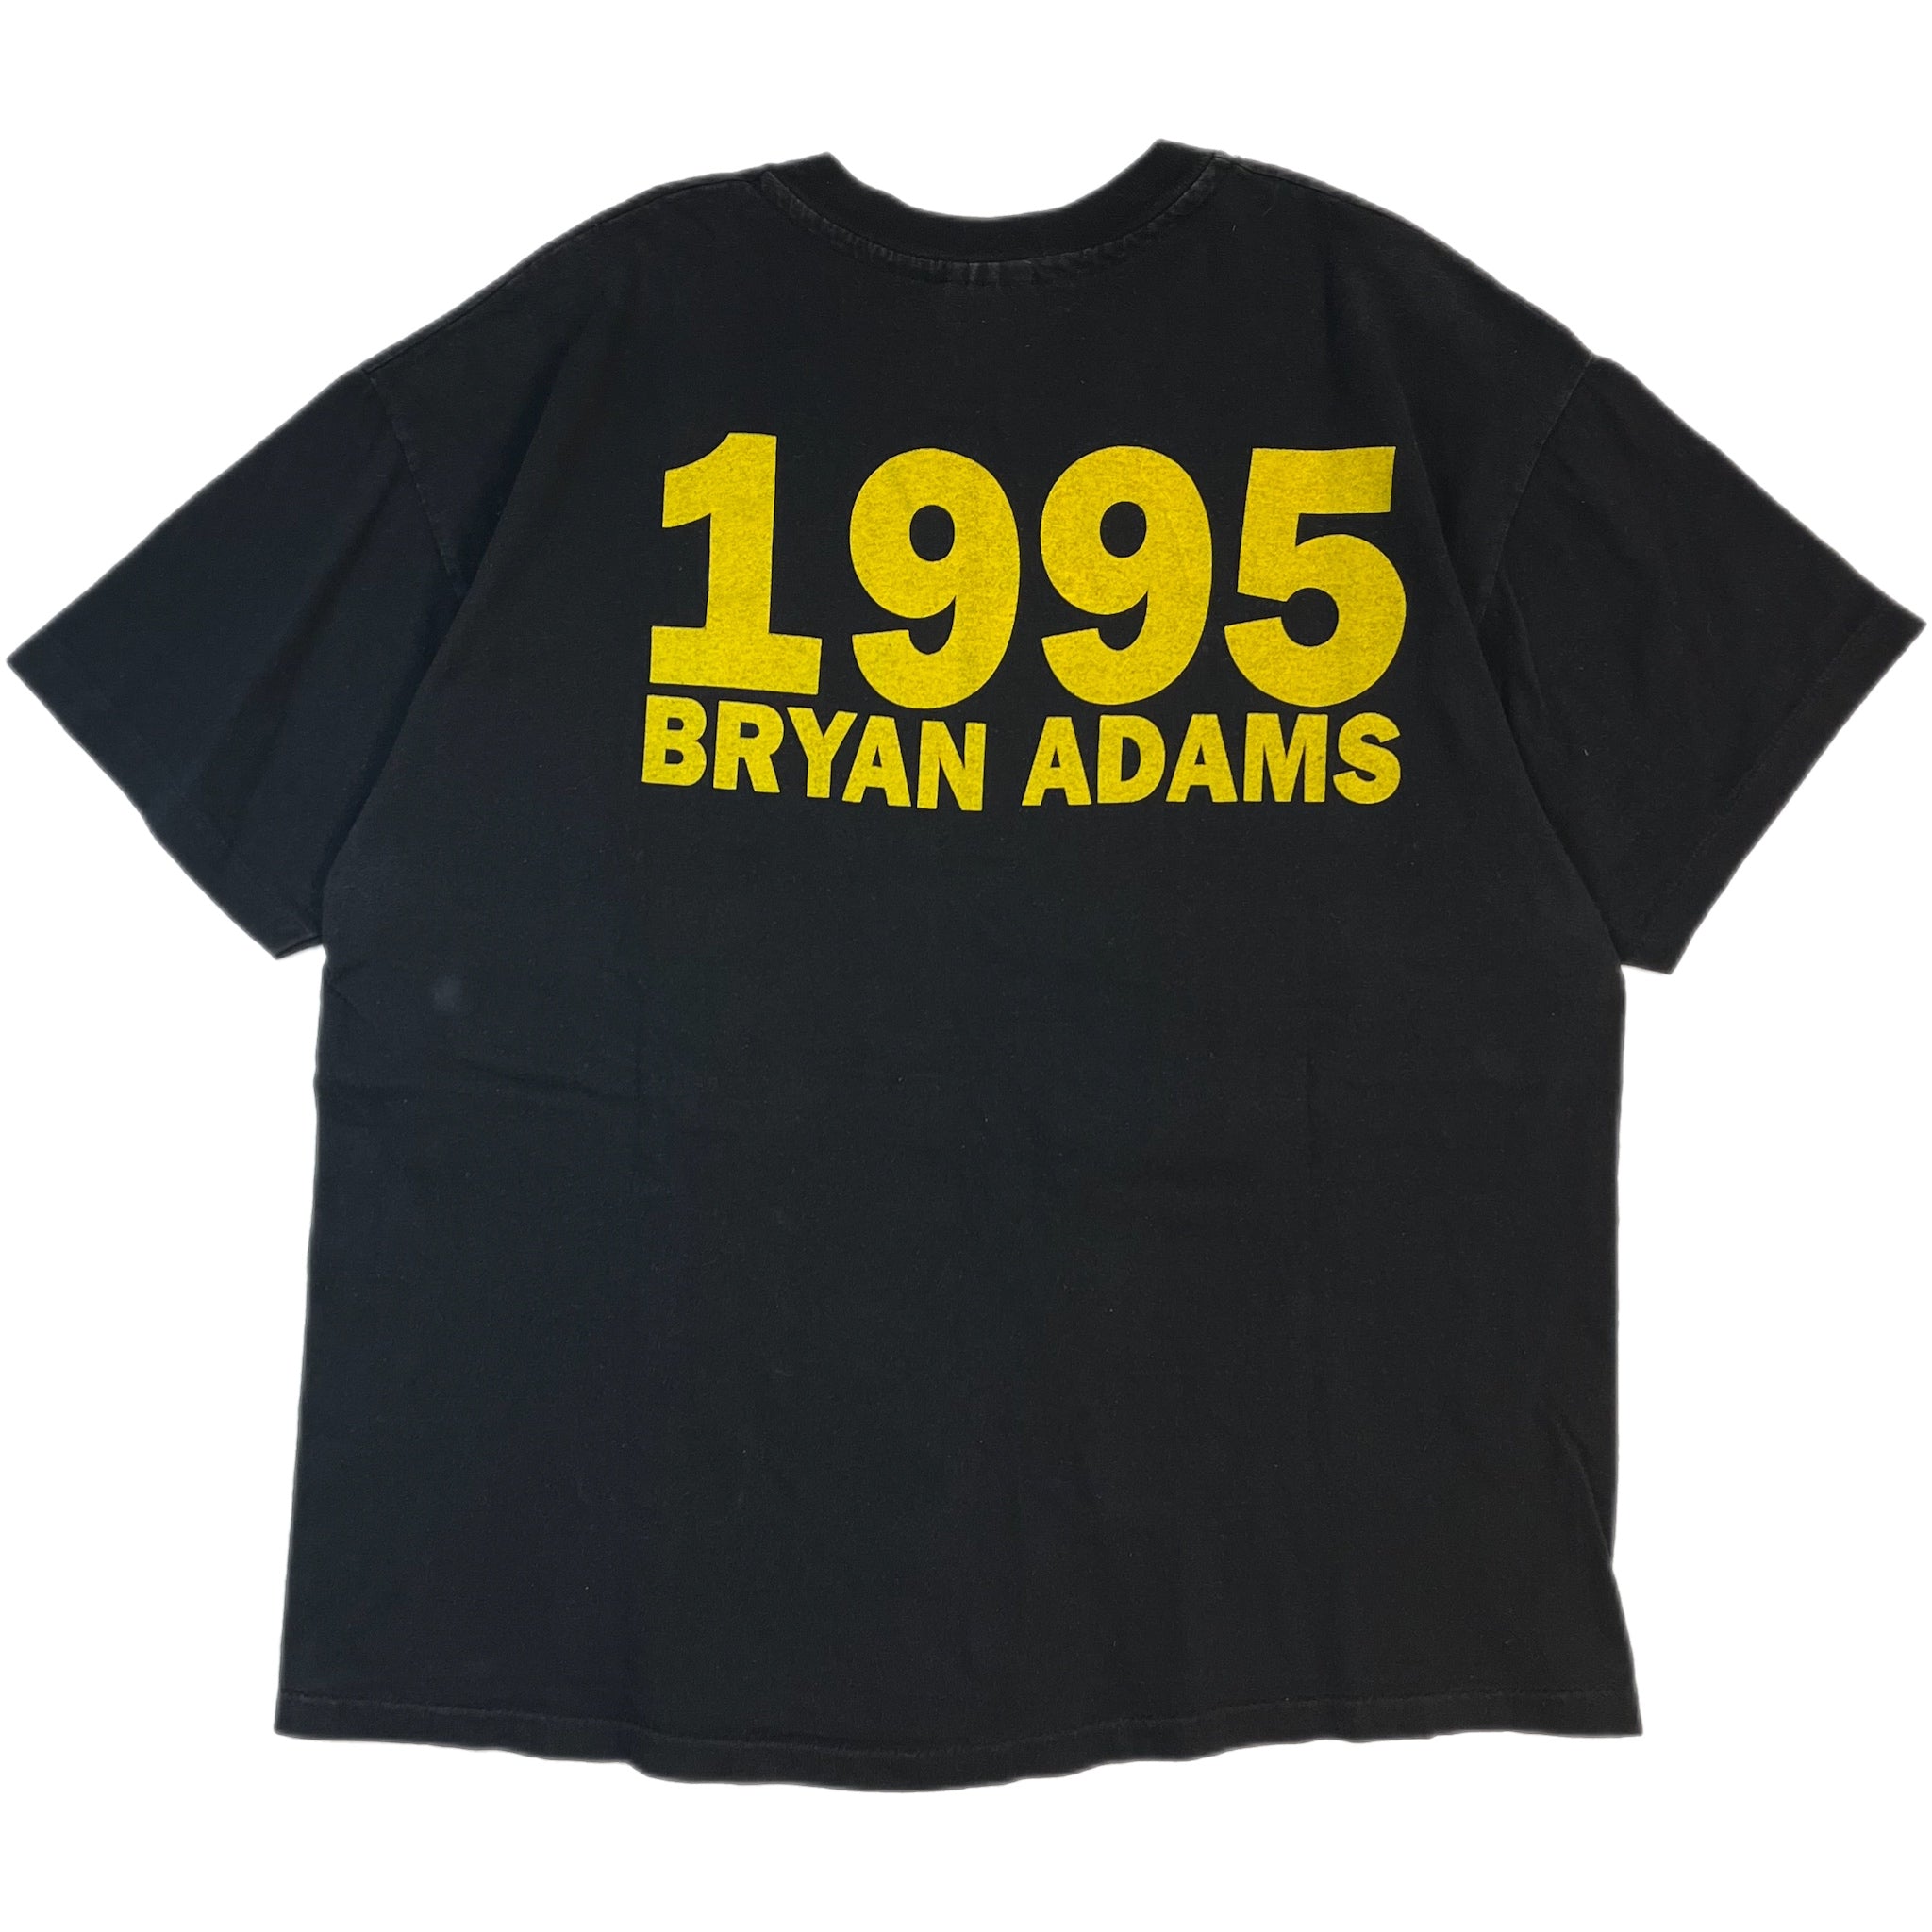 1995 Bryan Adams So Far So Good Tee Black